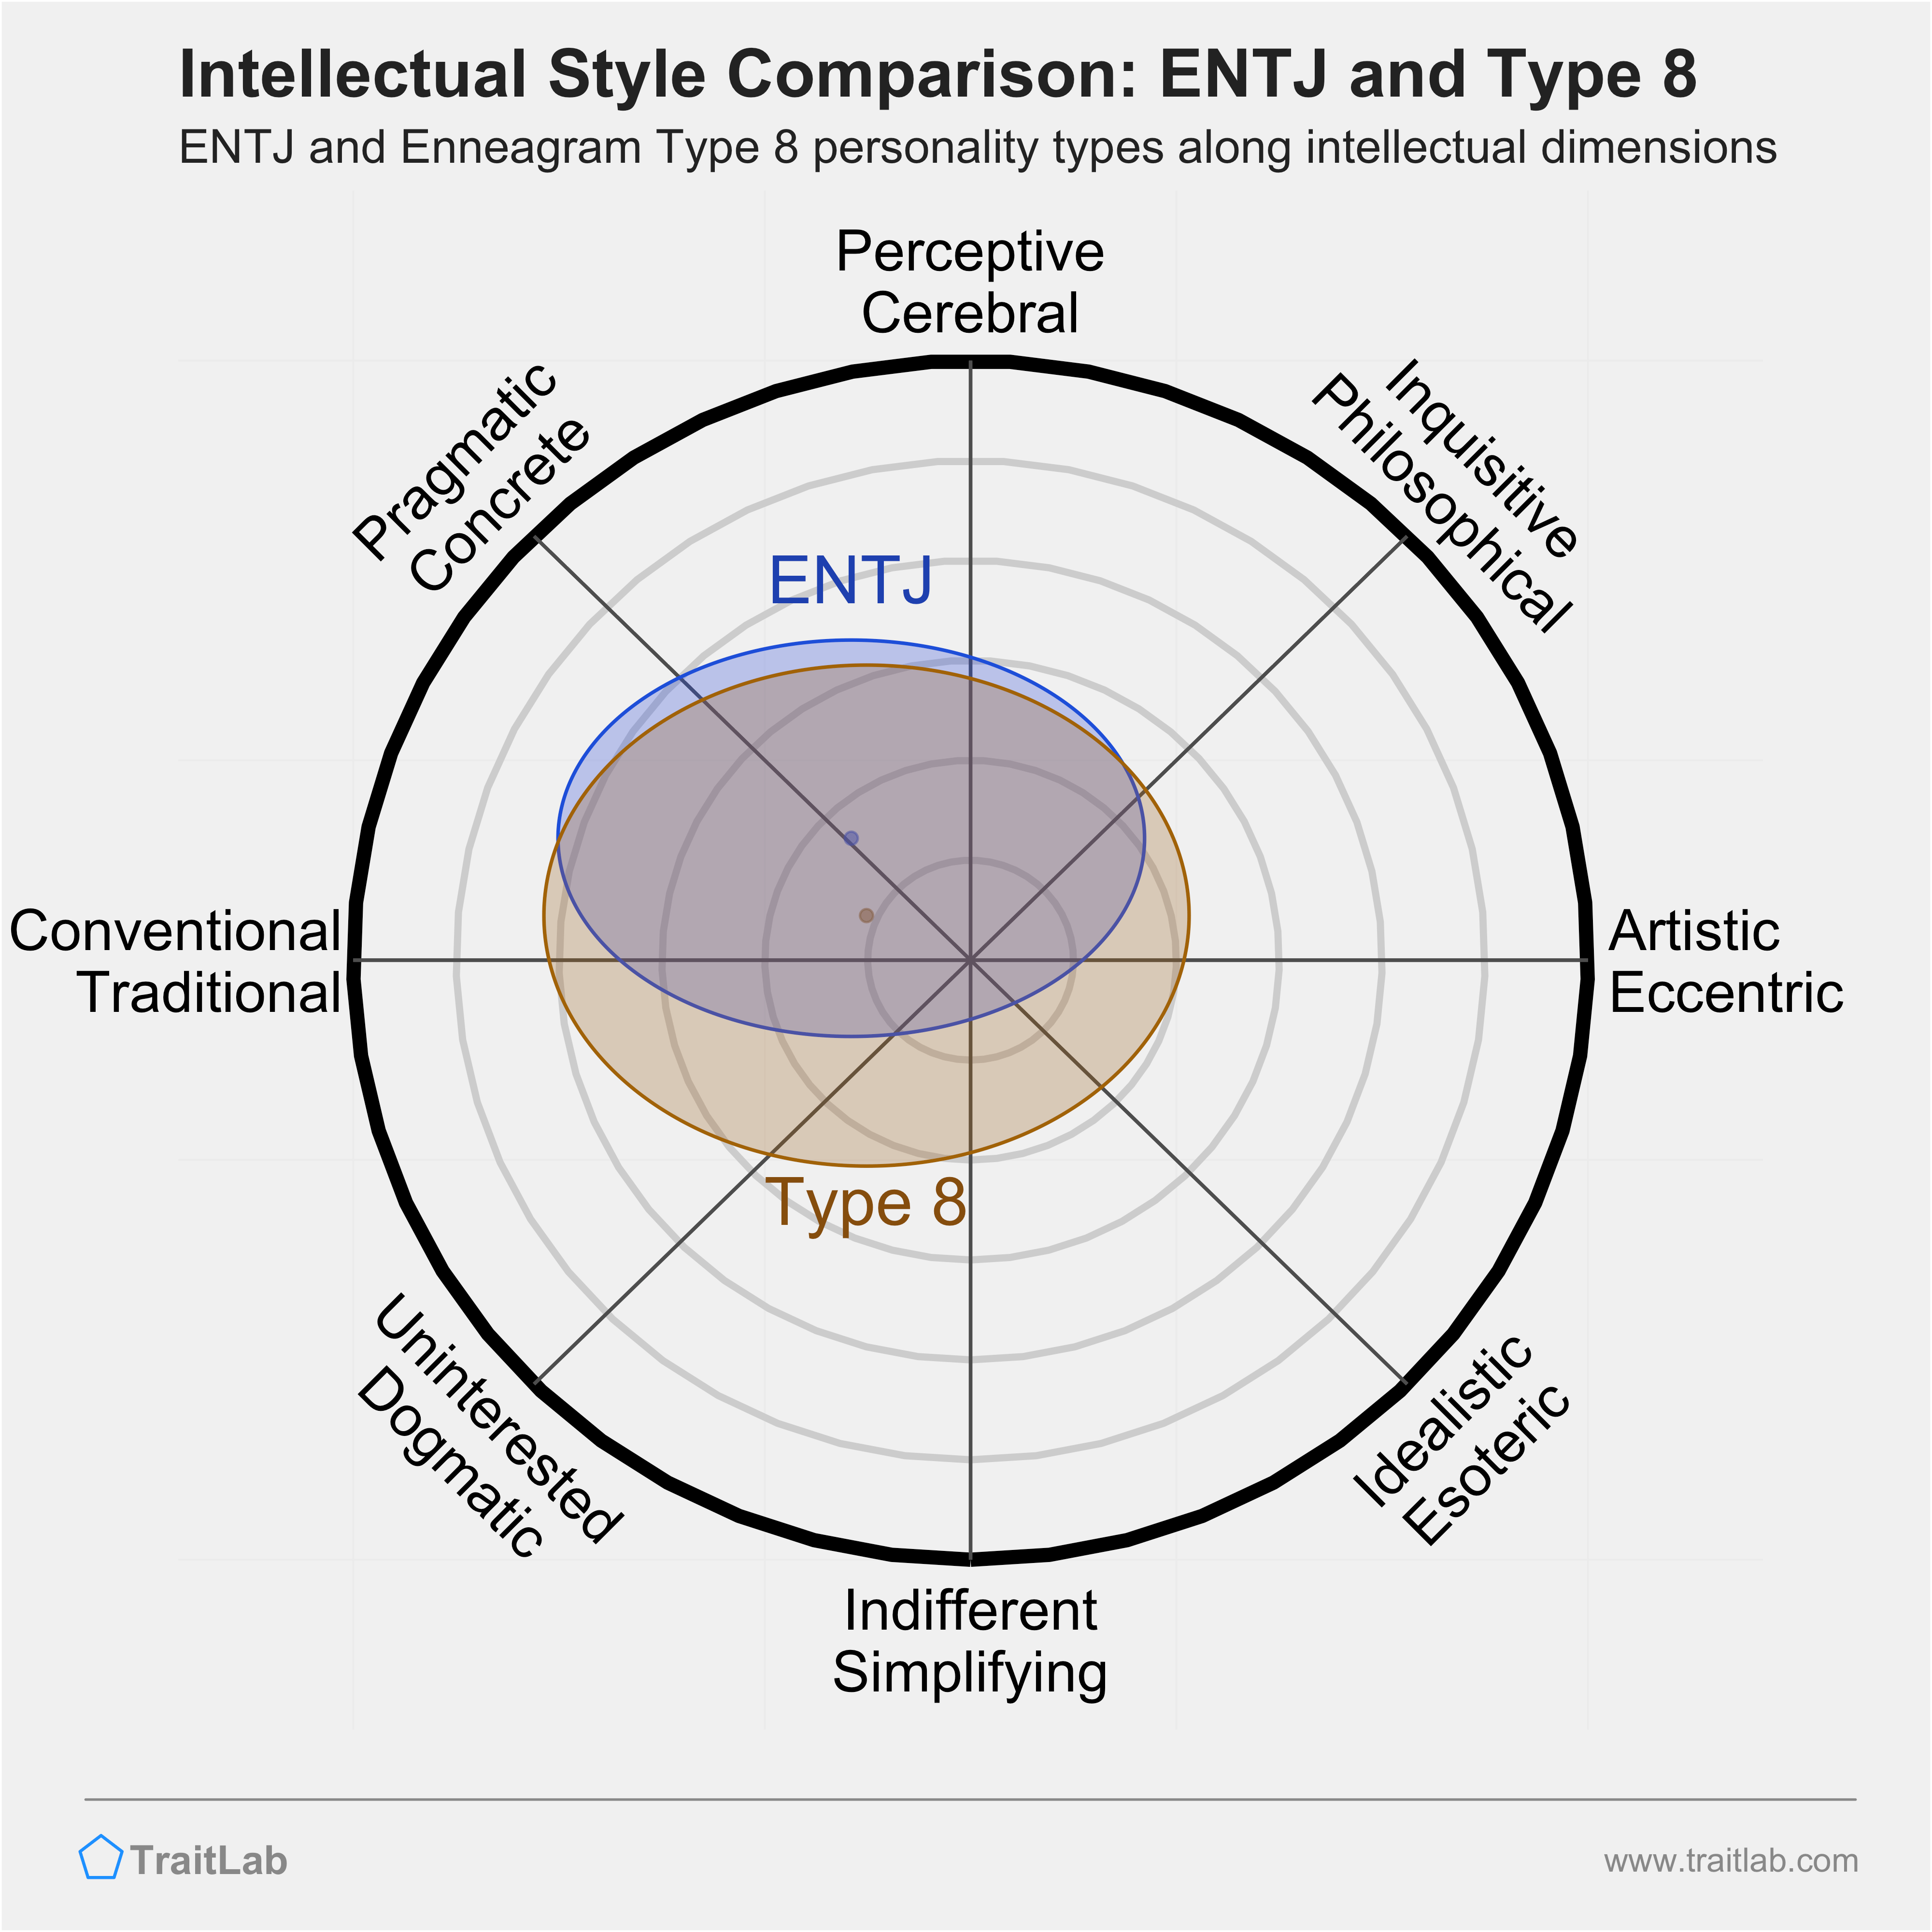 ENTJ and Type 8 comparison across intellectual dimensions